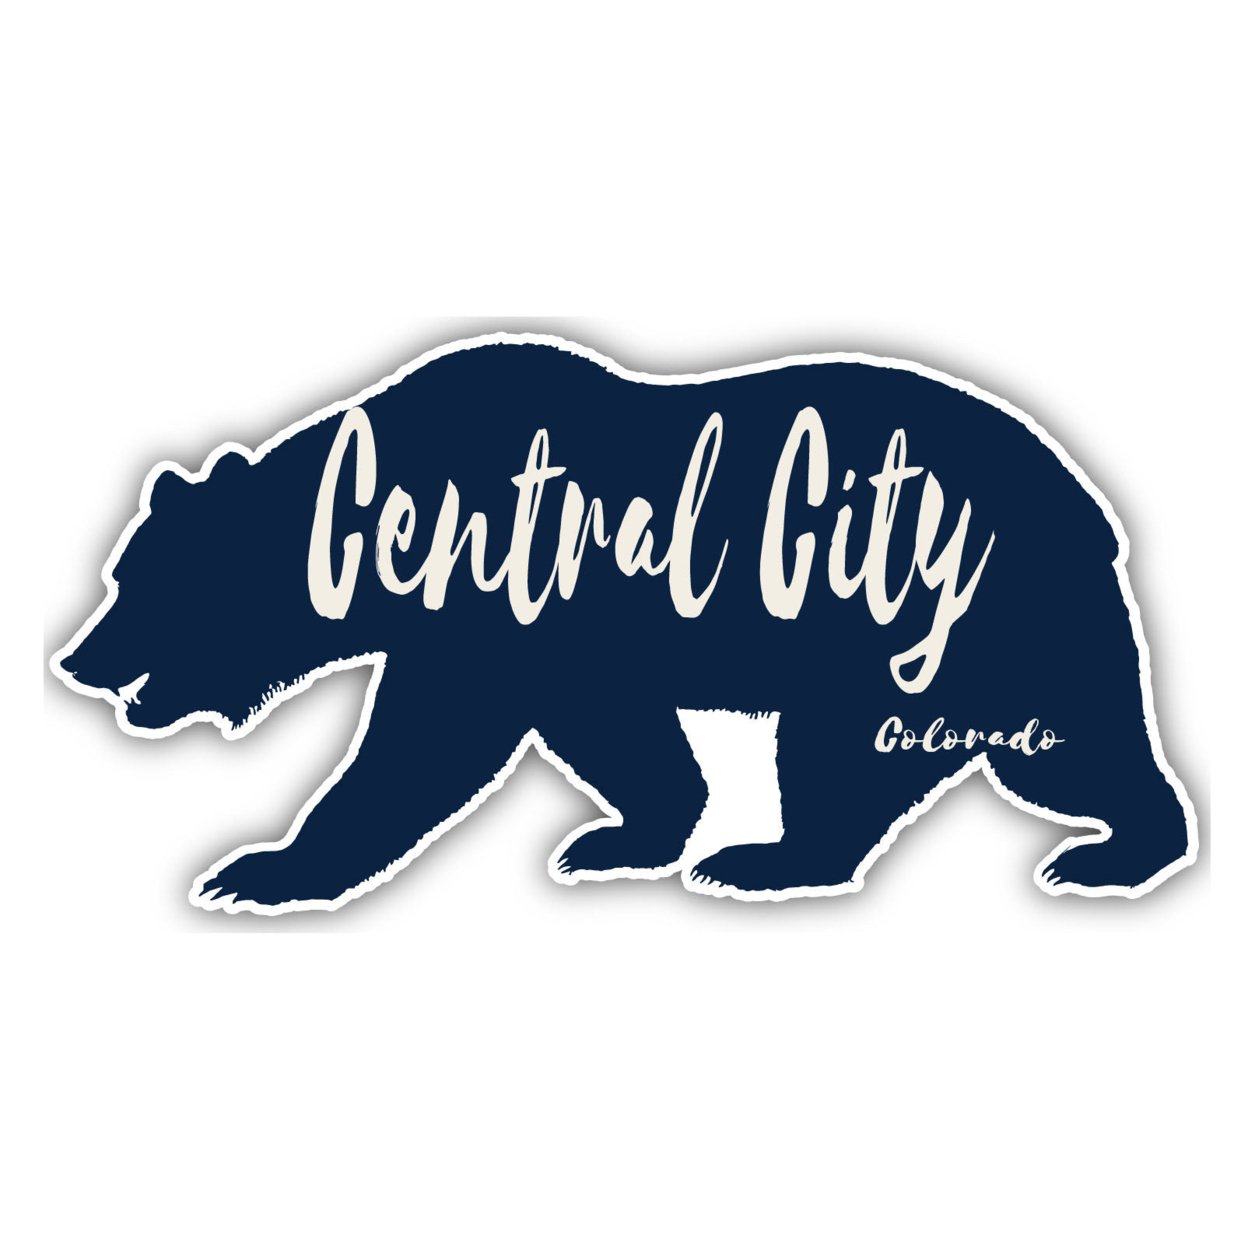 Central City Colorado Souvenir Decorative Stickers (Choose Theme And Size) - Single Unit, 10-Inch, Tent